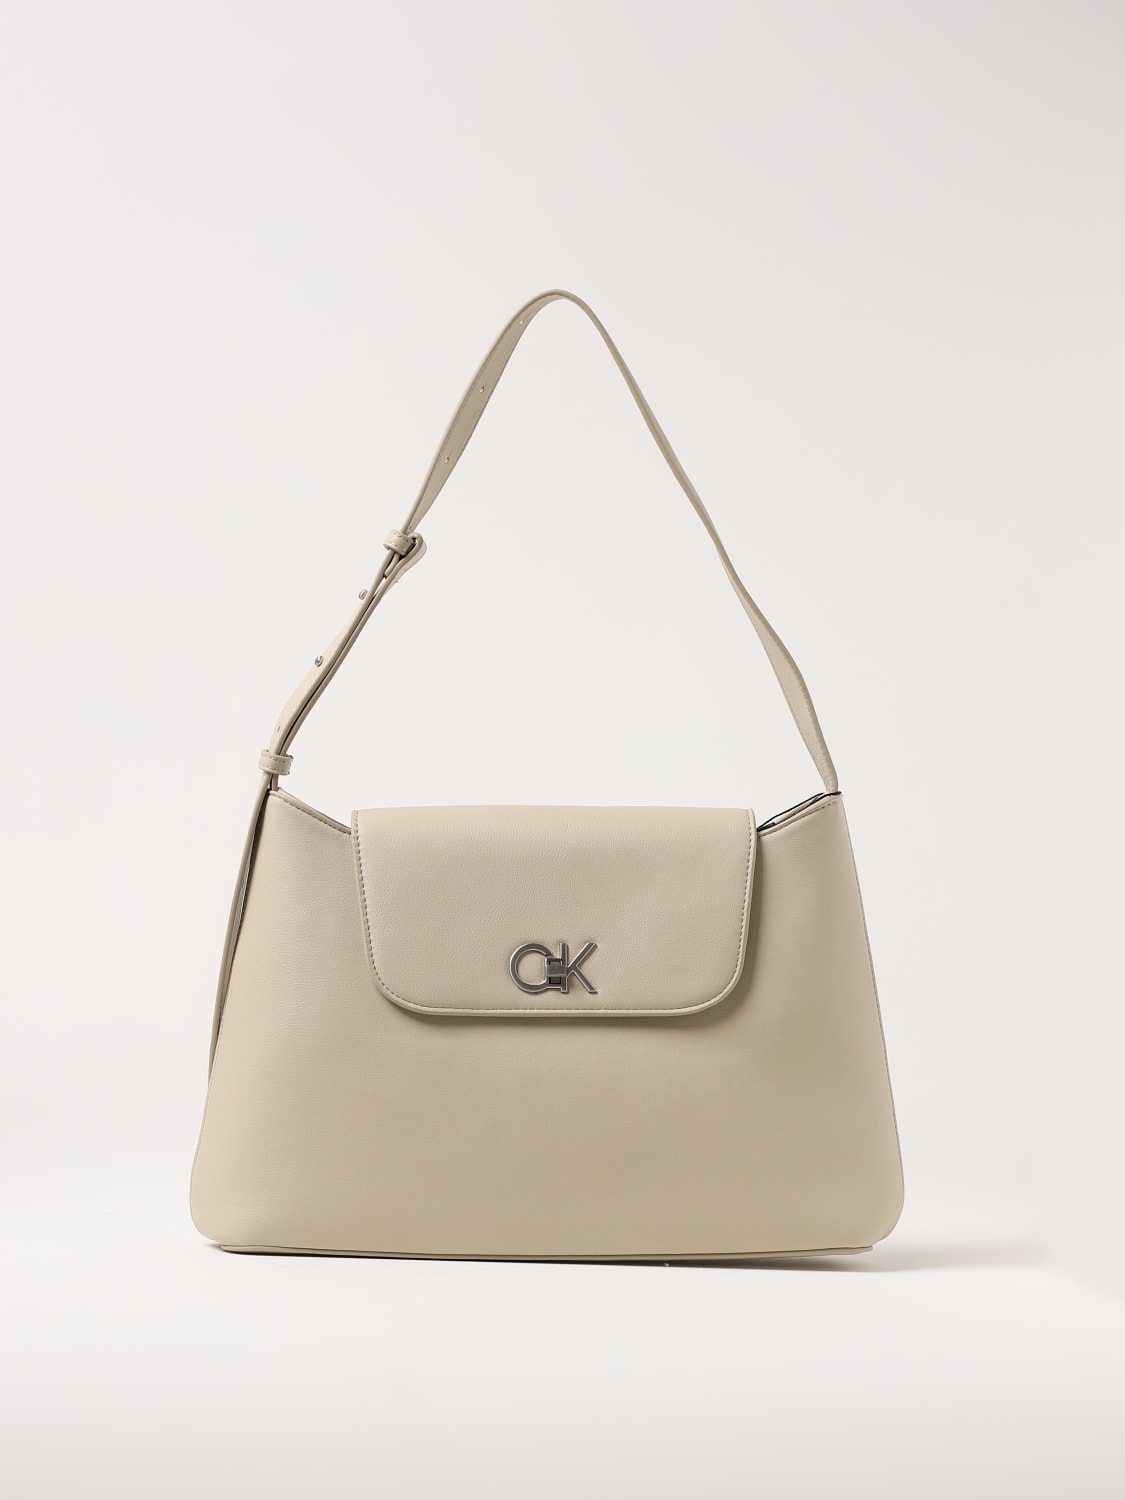 Calvin Klein Woman's Shoulder Bag